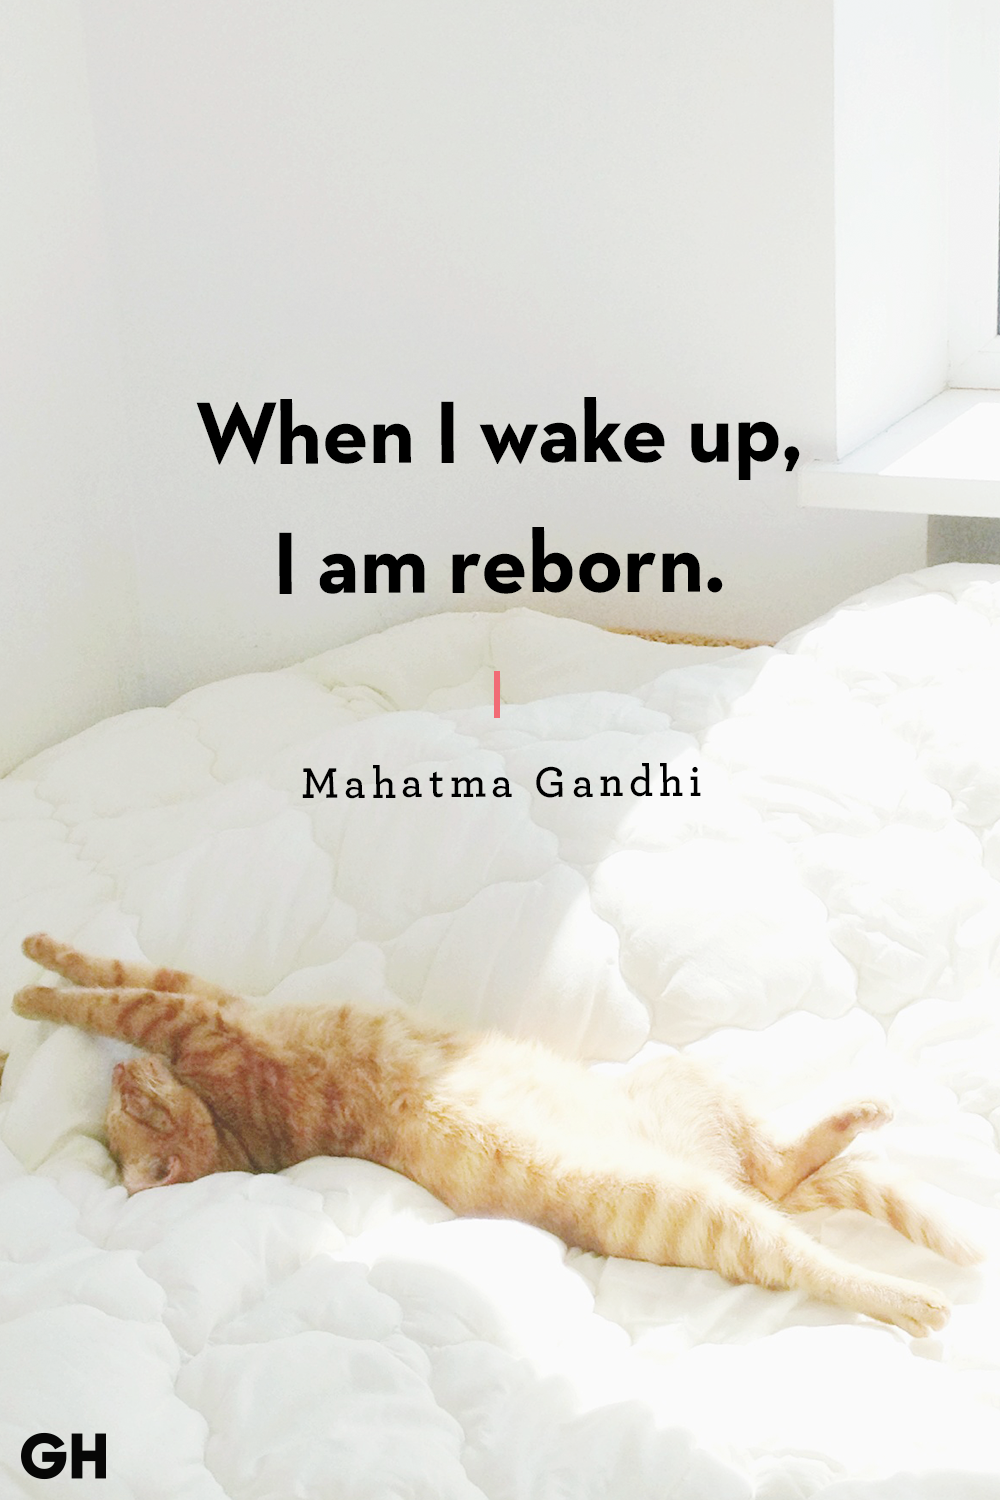 when i wake up, i am reborn. mahatma gandhi